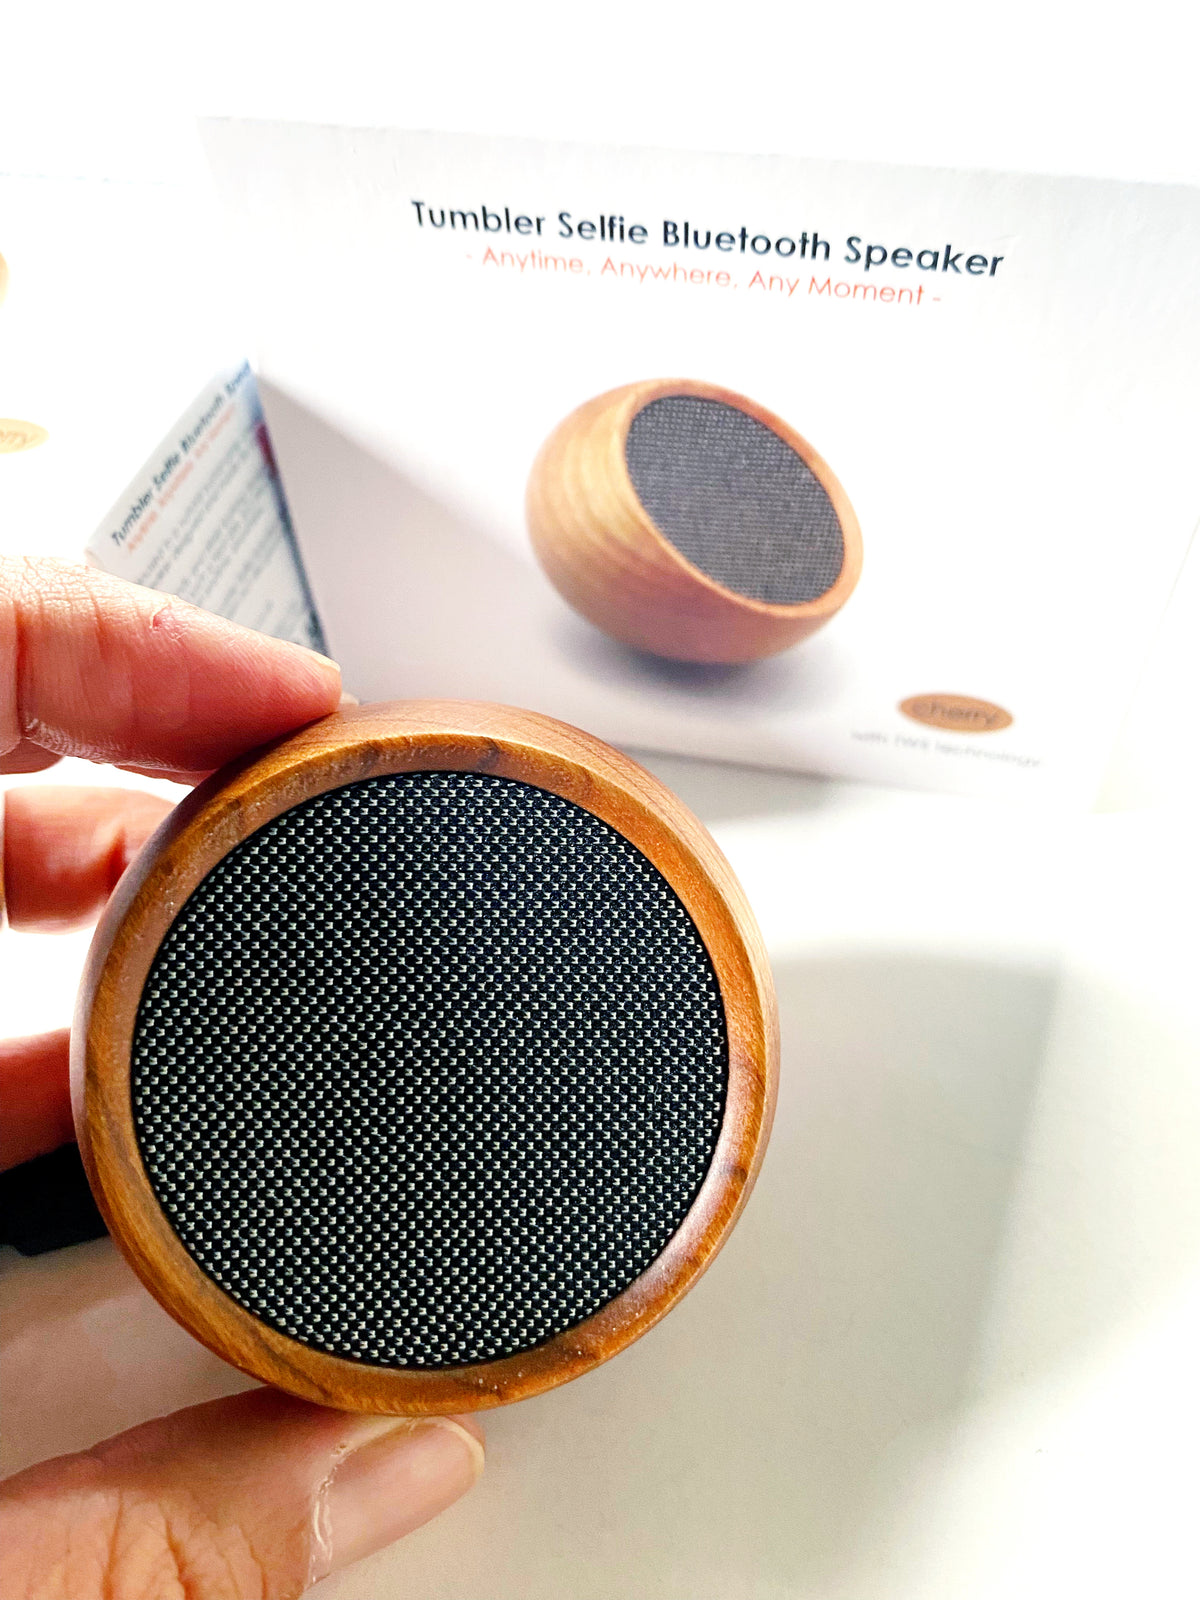 Gingko - Tumbler Selfie Bluetooth Speaker